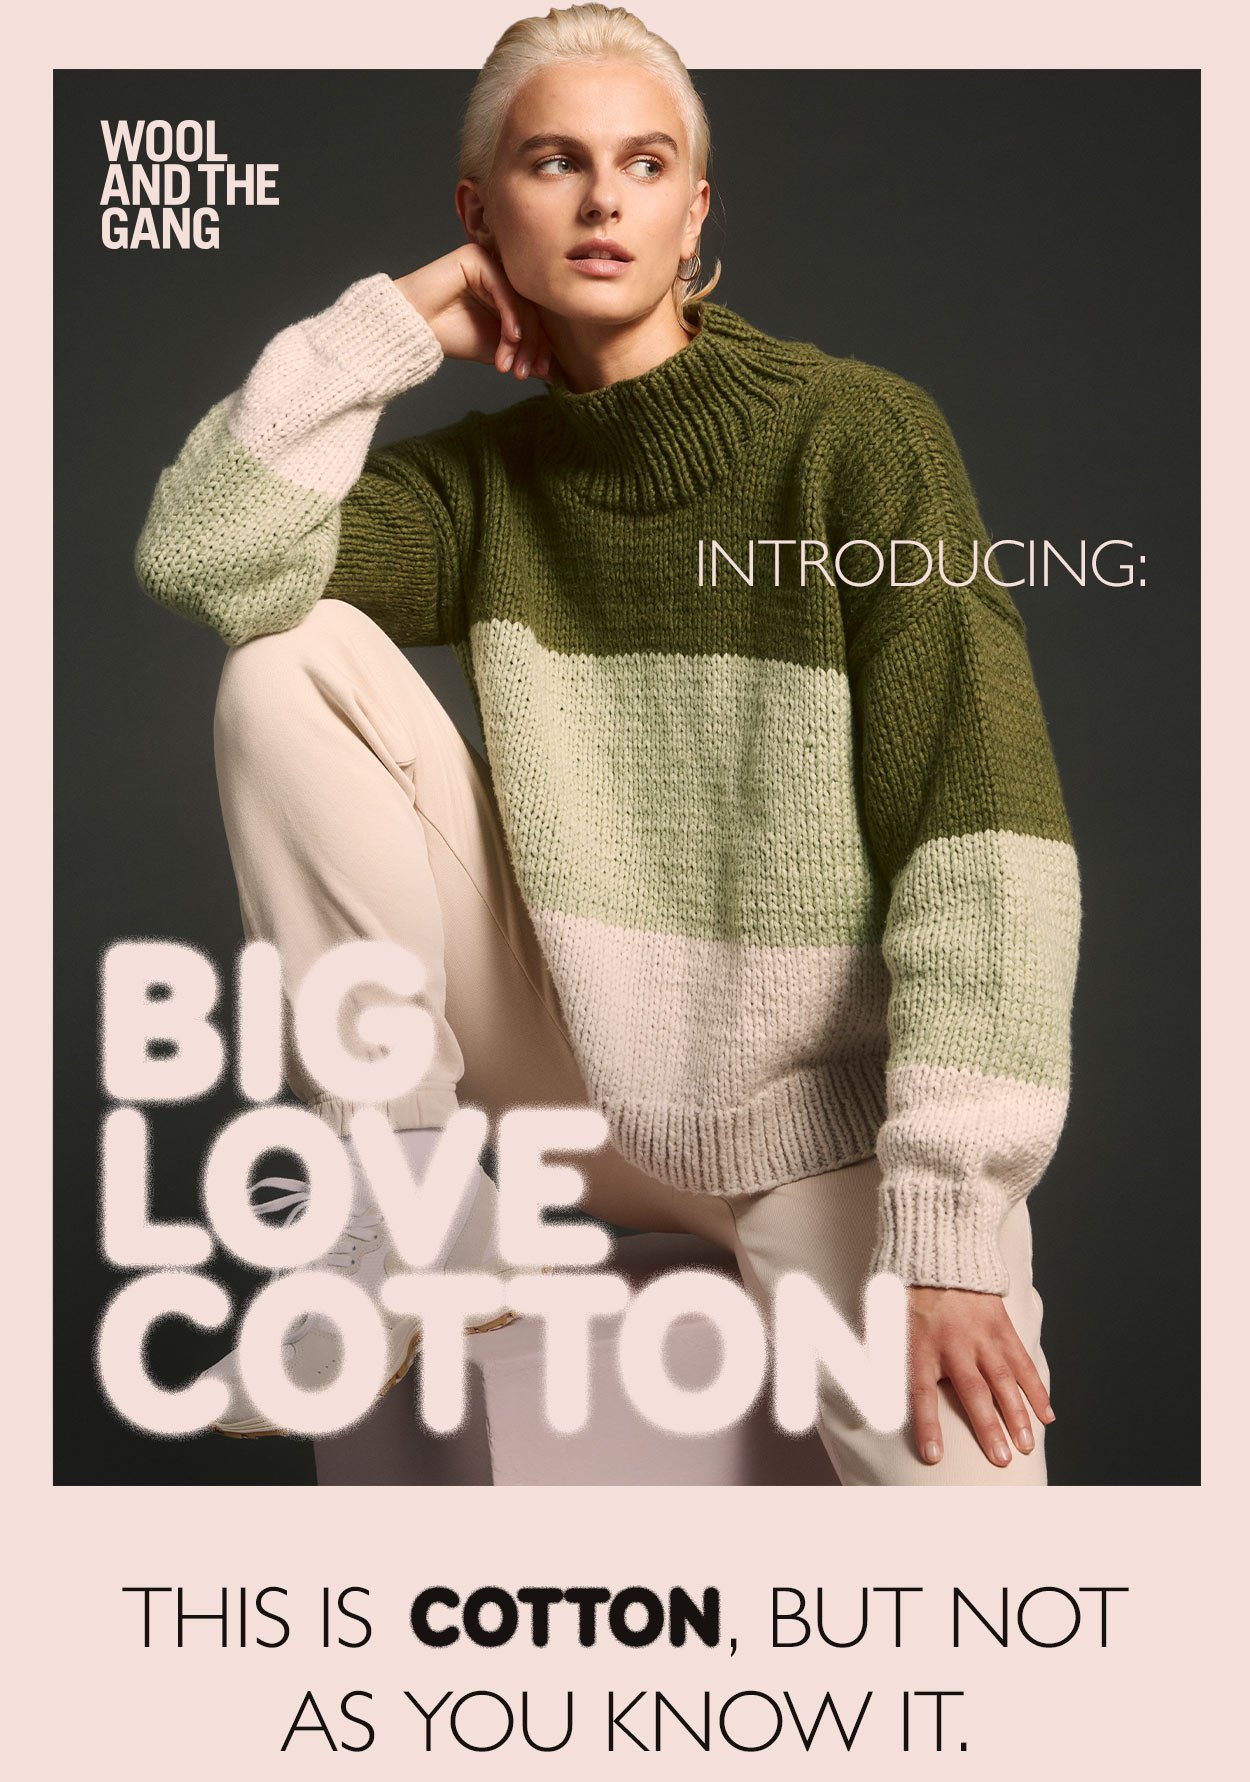 Big Love Cotton